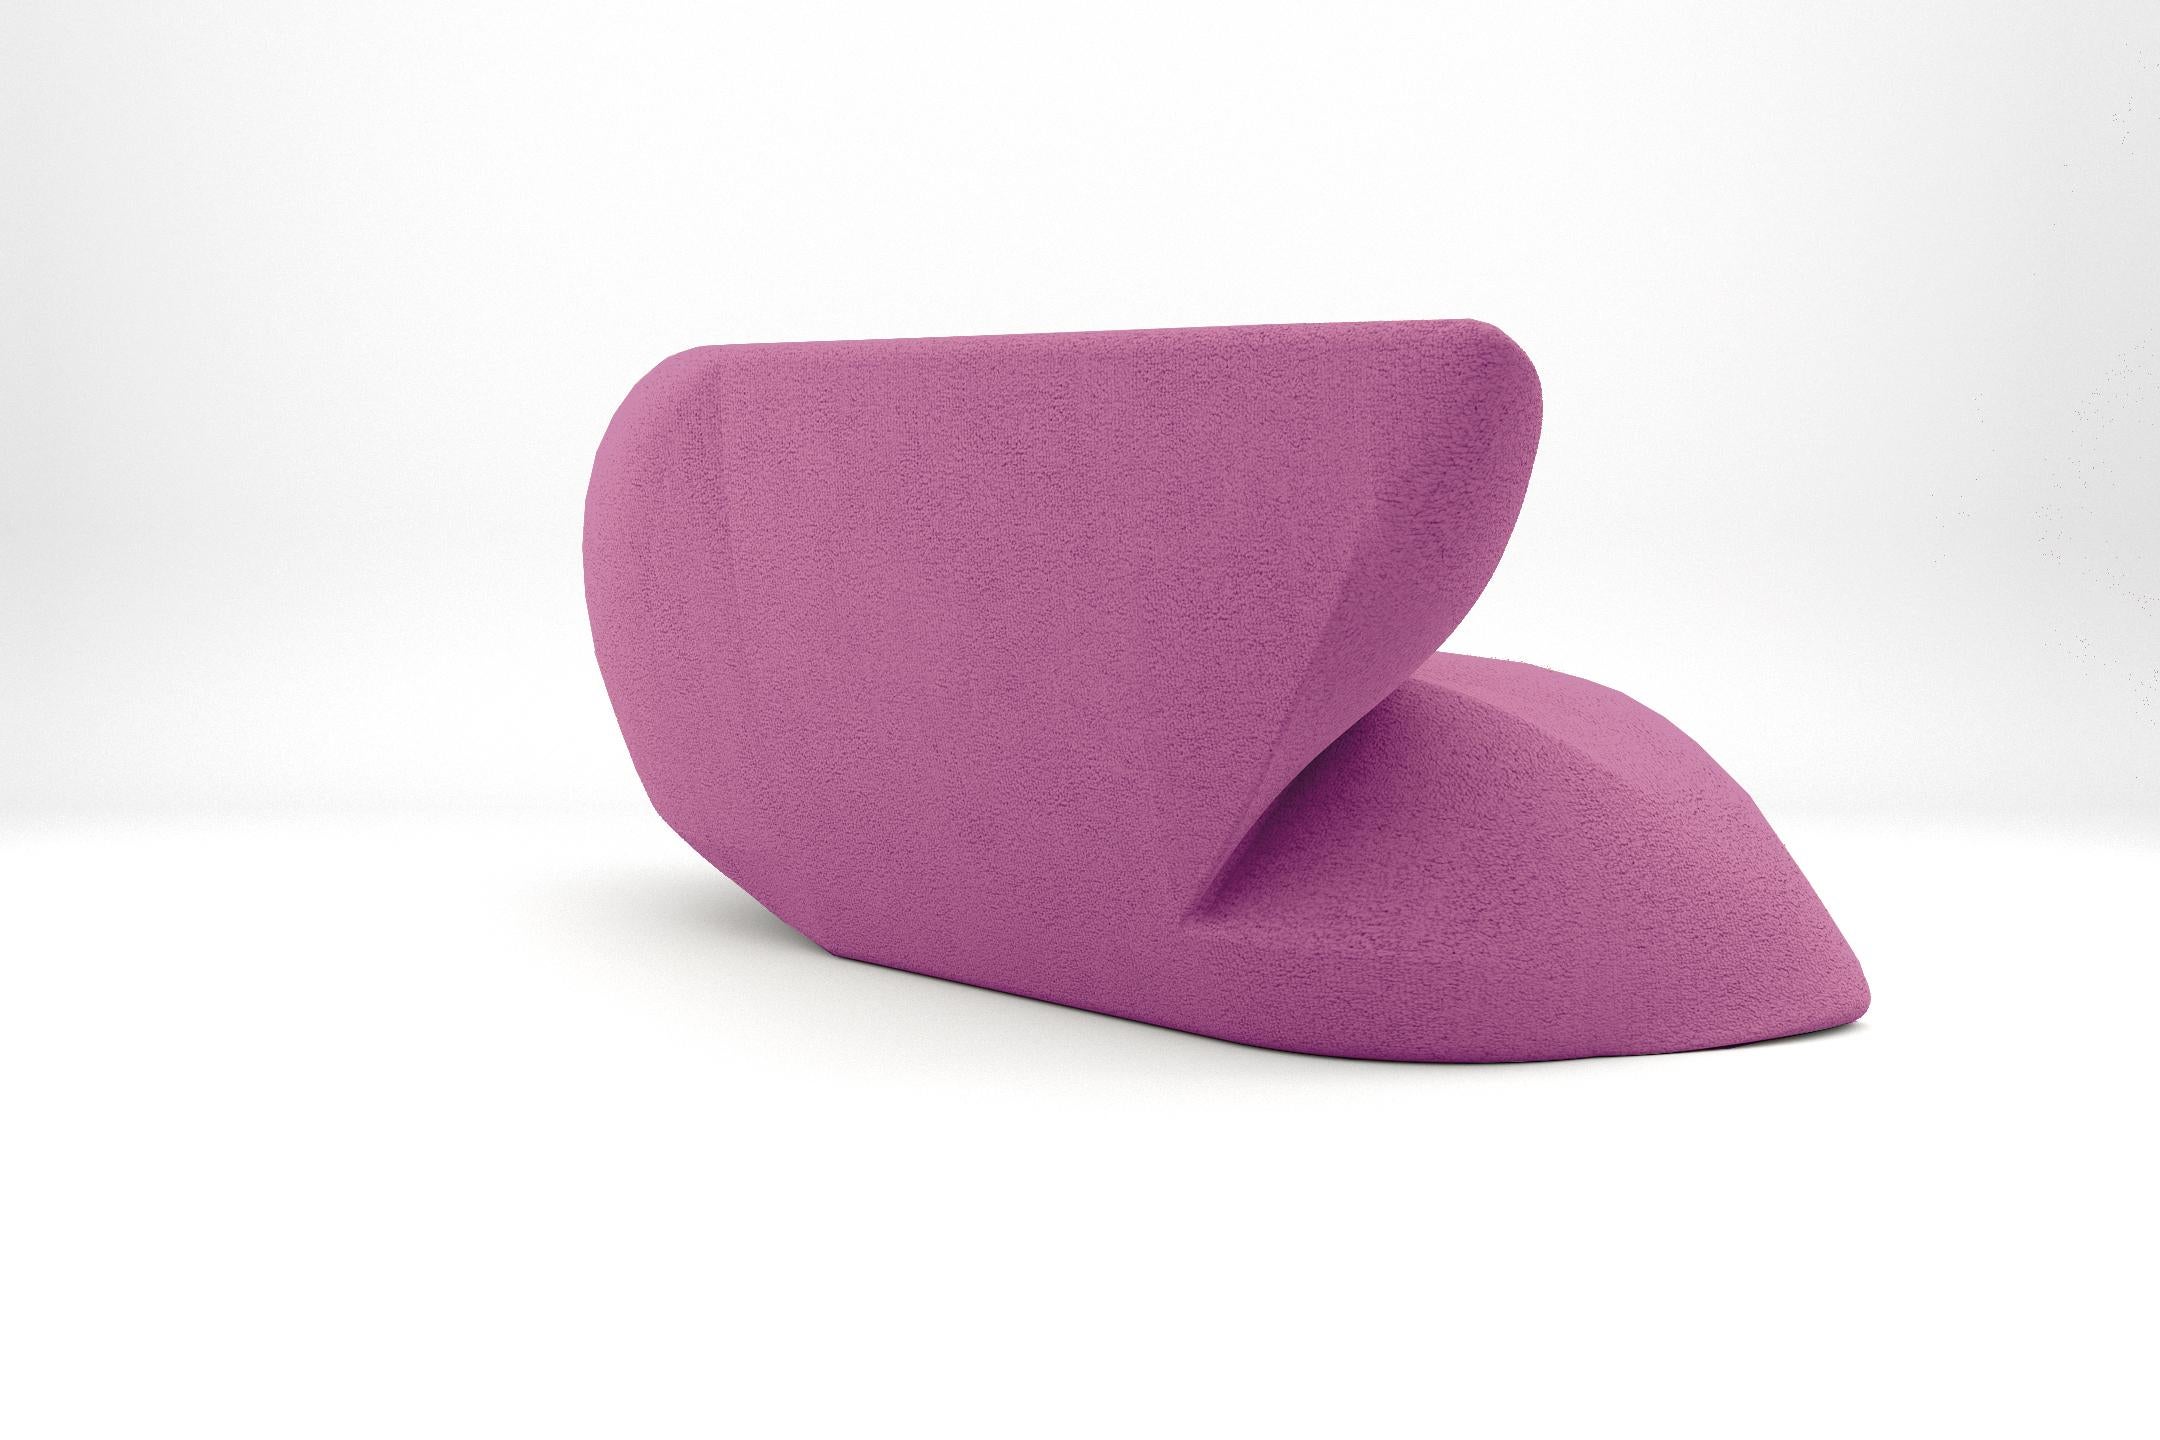 European Delta Sofa - Modern Violet Upholstered Two Seat Sofa For Sale